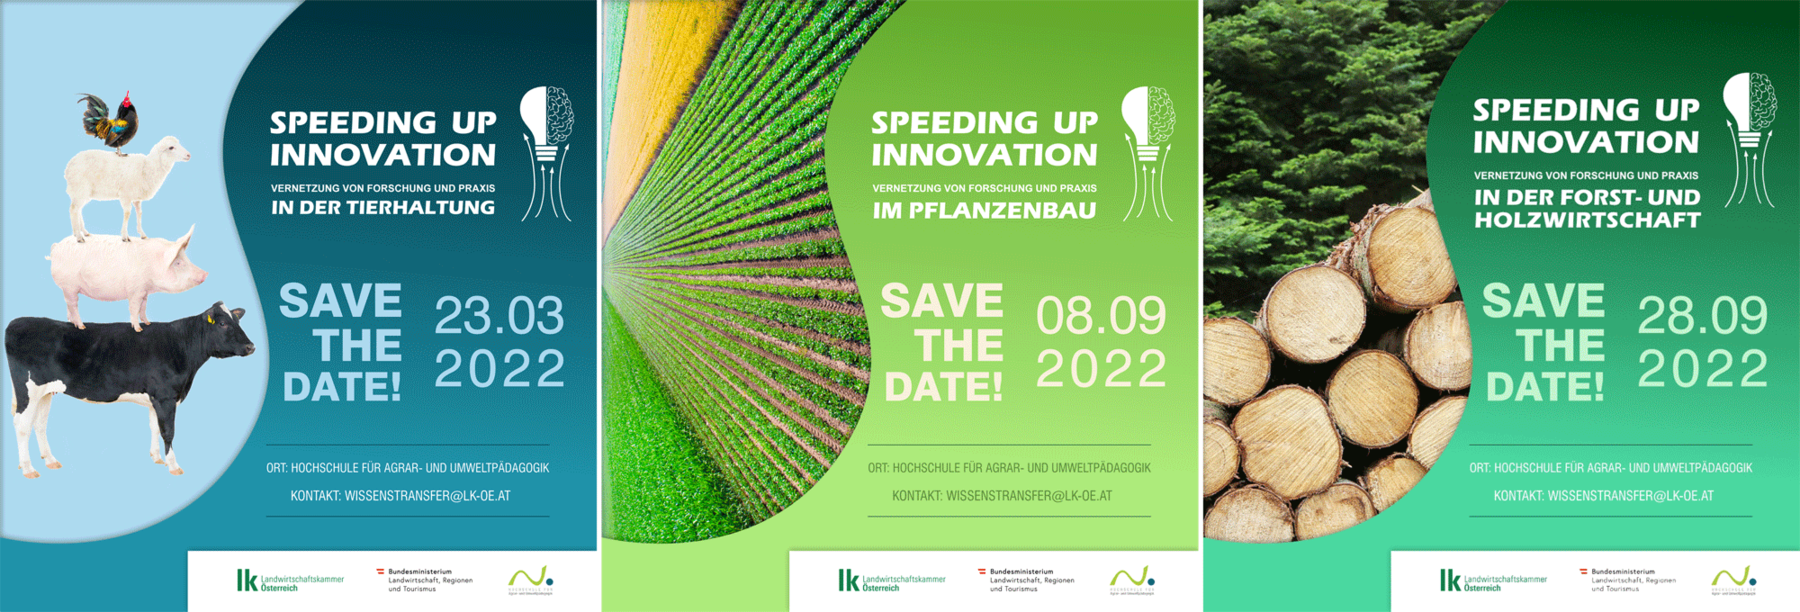 Speeding Up Innovation Veranstaltungen 2022.png